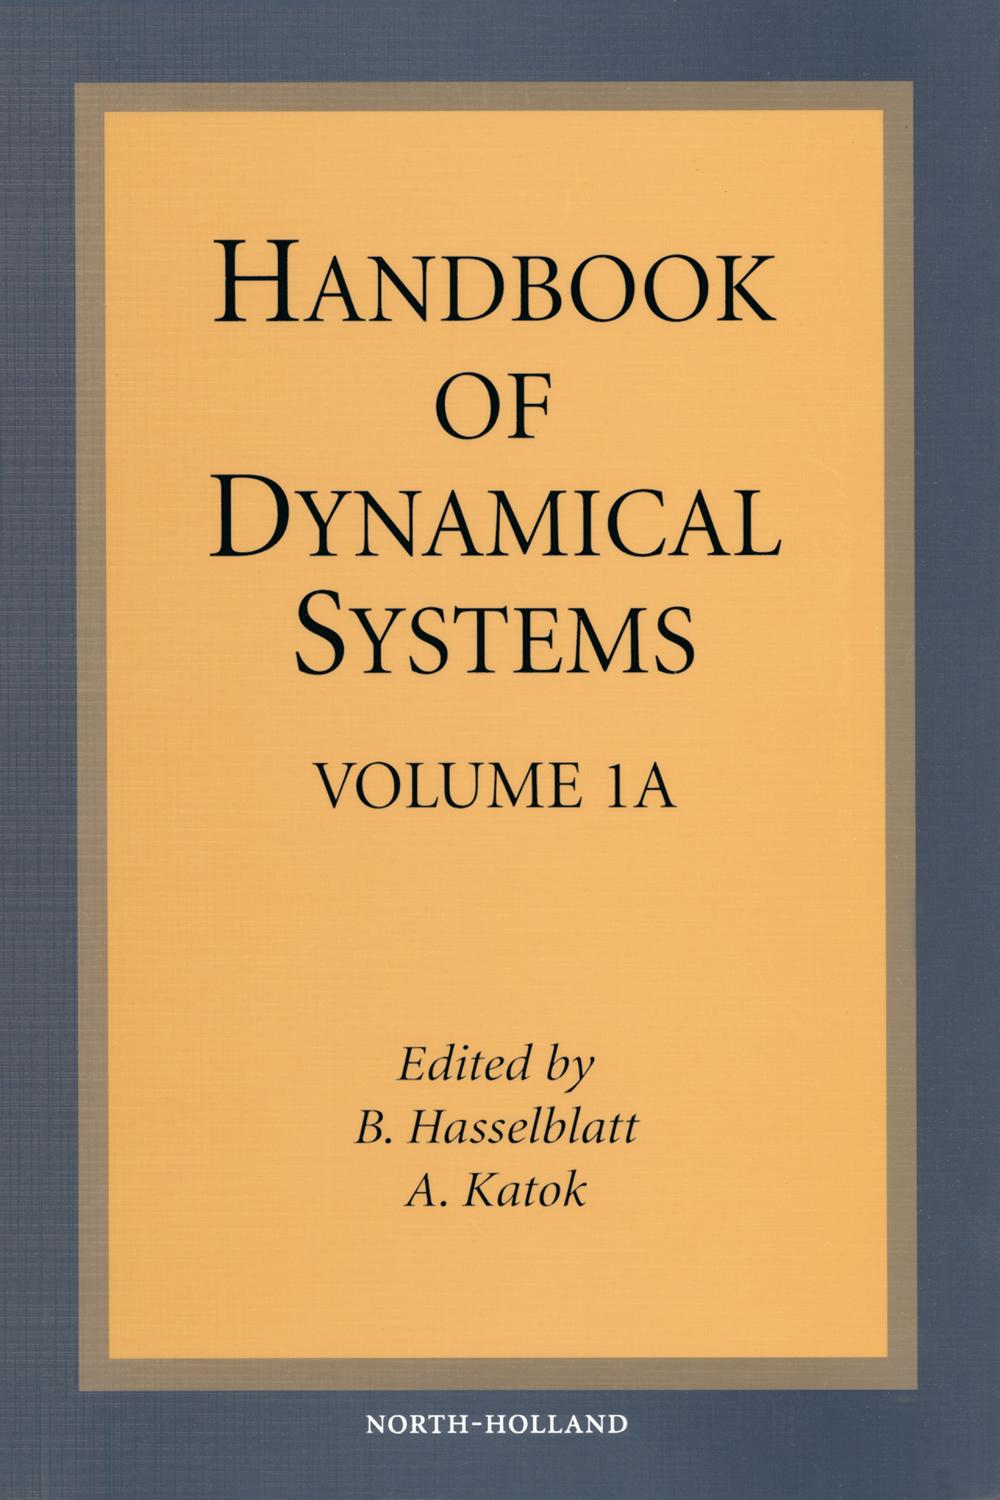 Handbook of Dynamical Systems - B. Hasselblatt, A. Katok